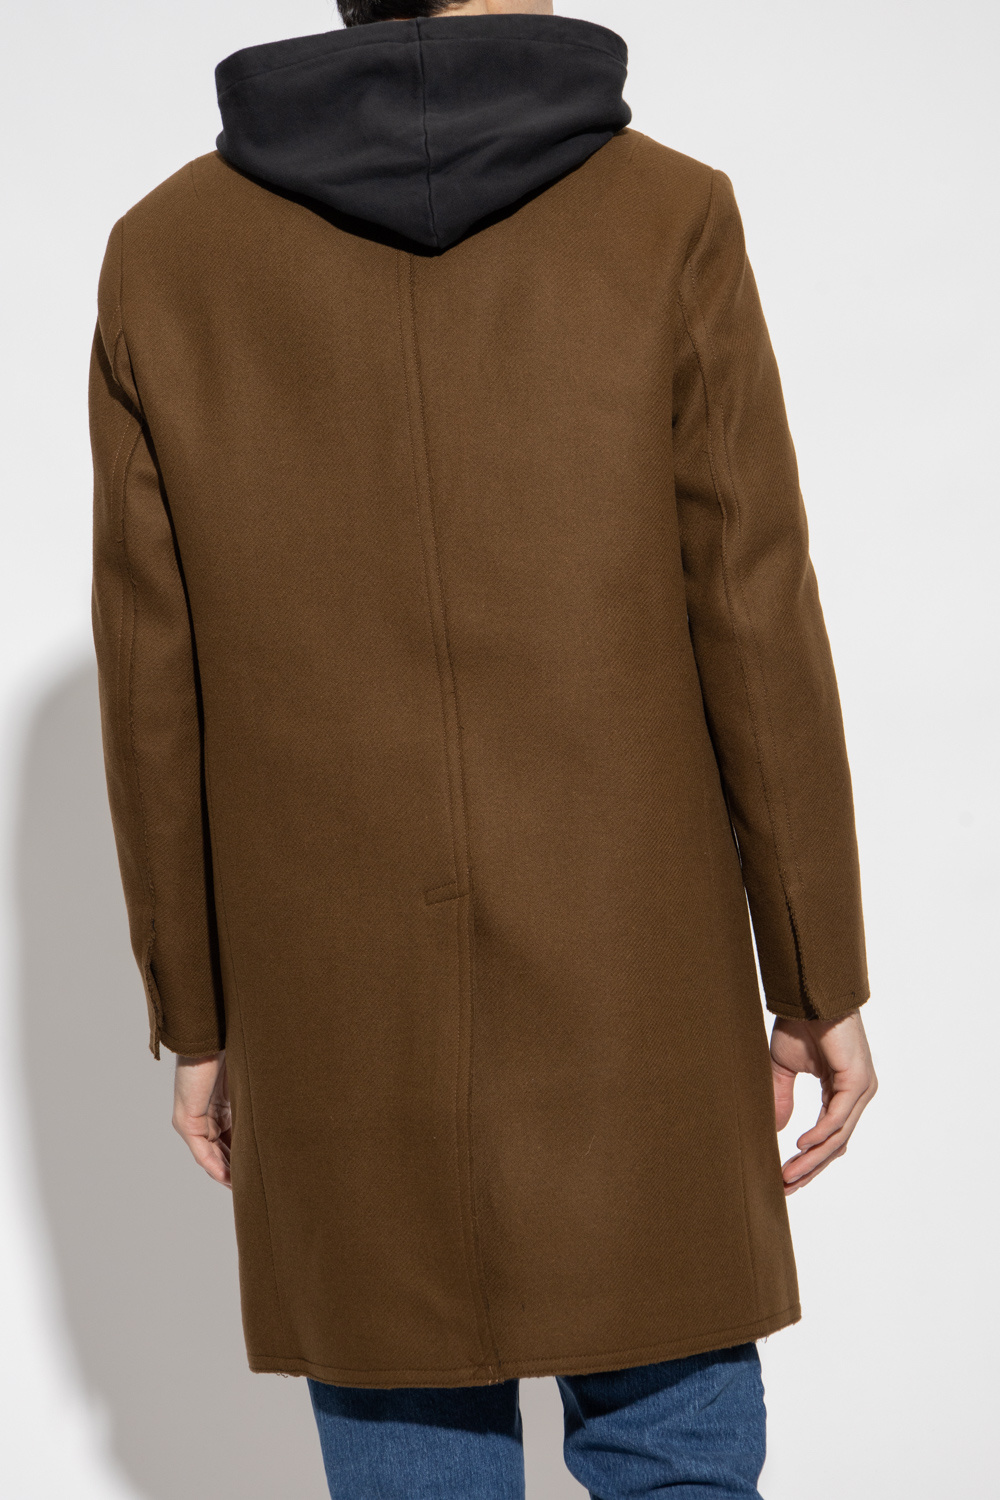 AllSaints ‘Rawston’ patterned wool coat